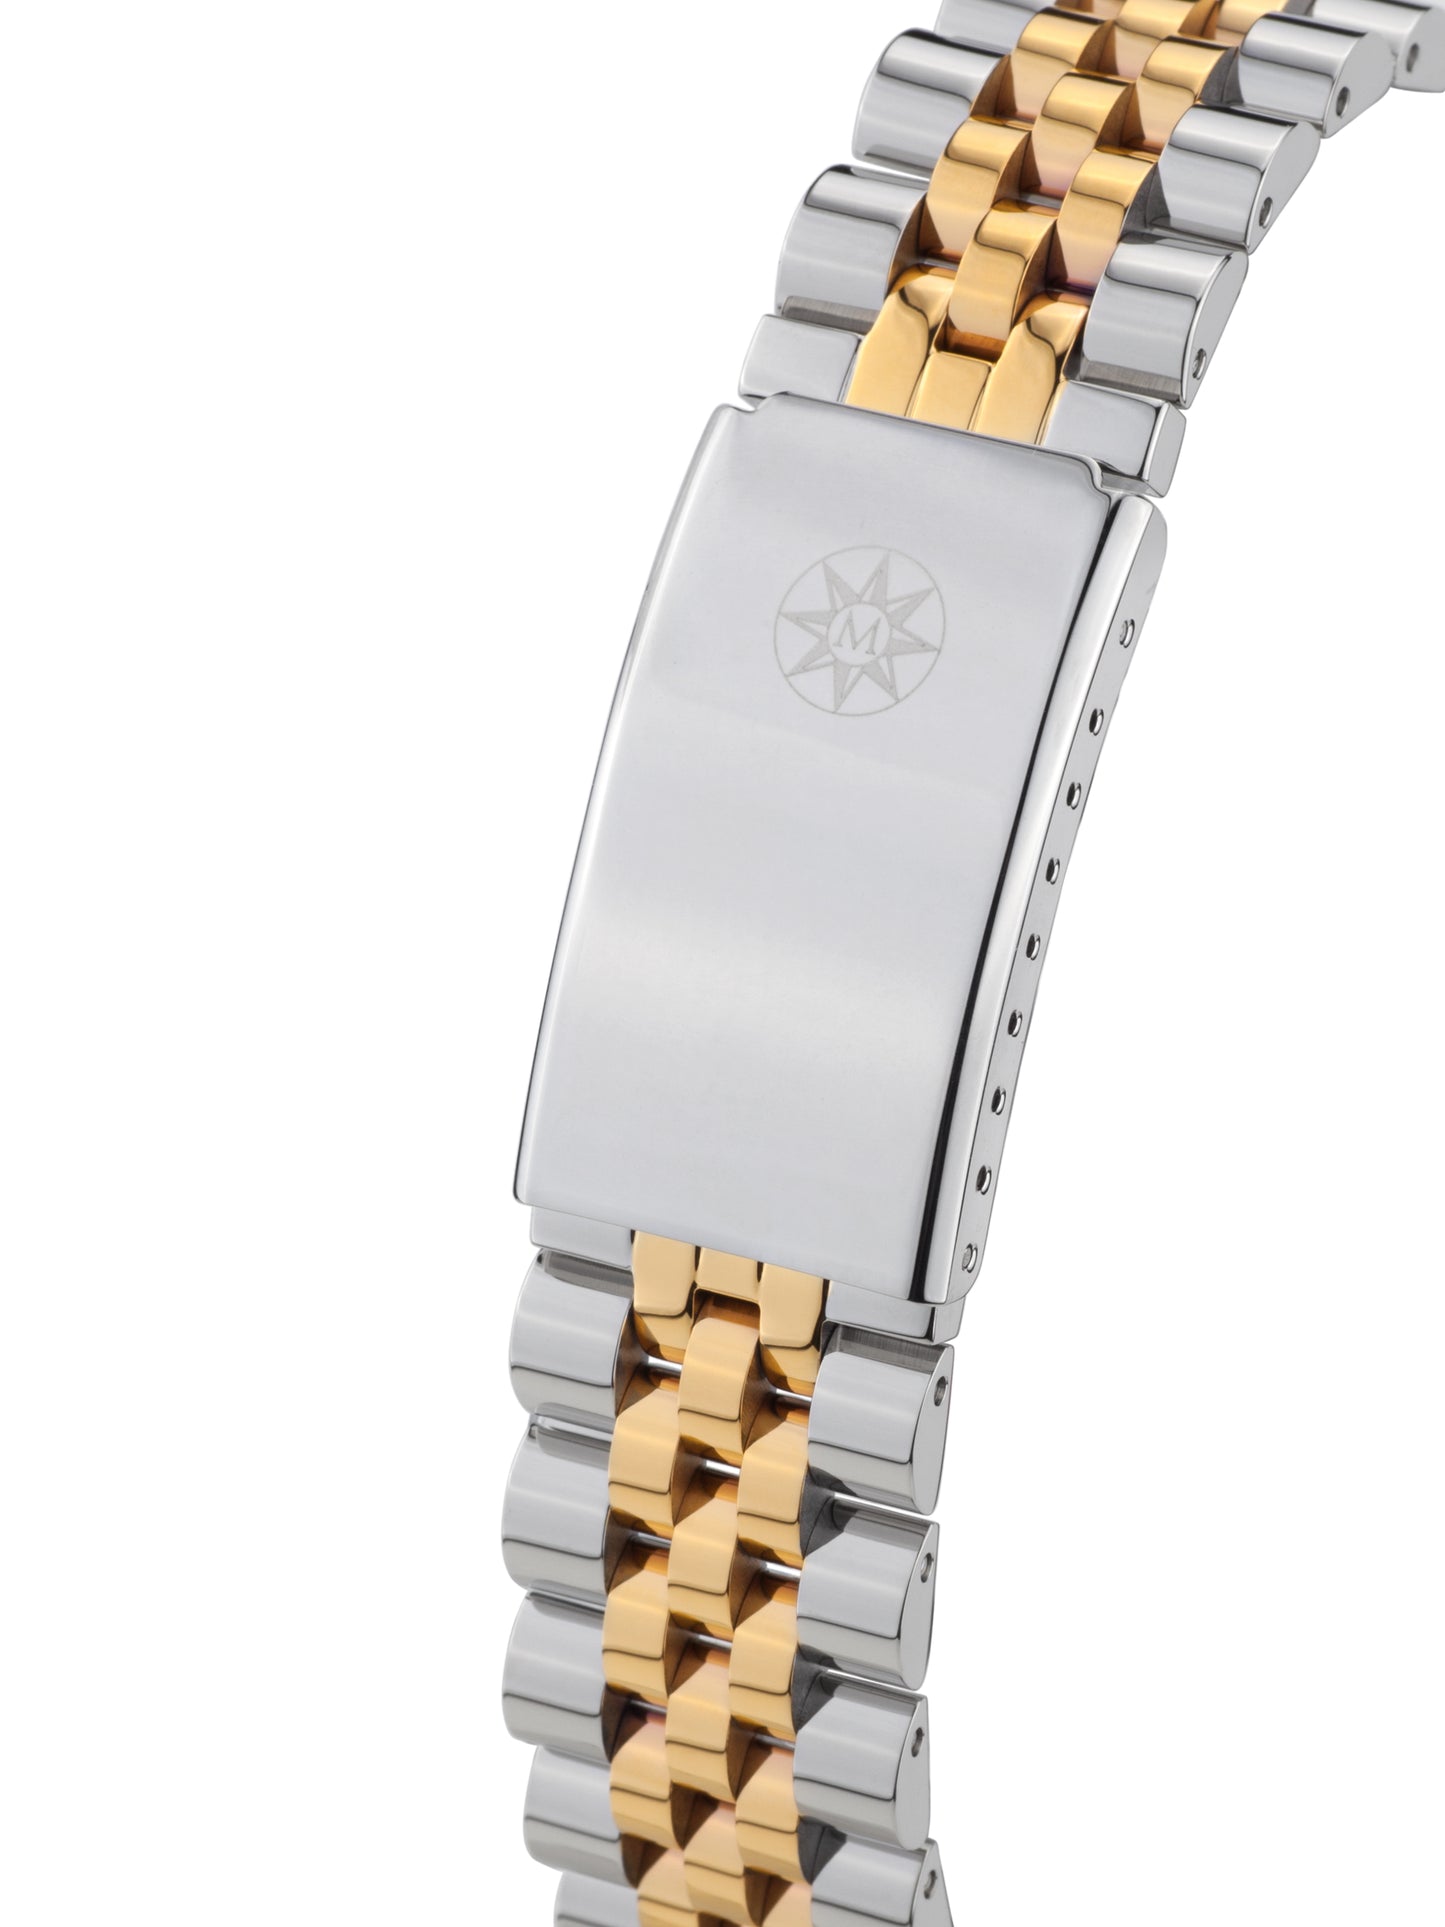 Automatic watches — Beauté de Suisse — Mathis Montabon — Gold IP Silber Two Tone